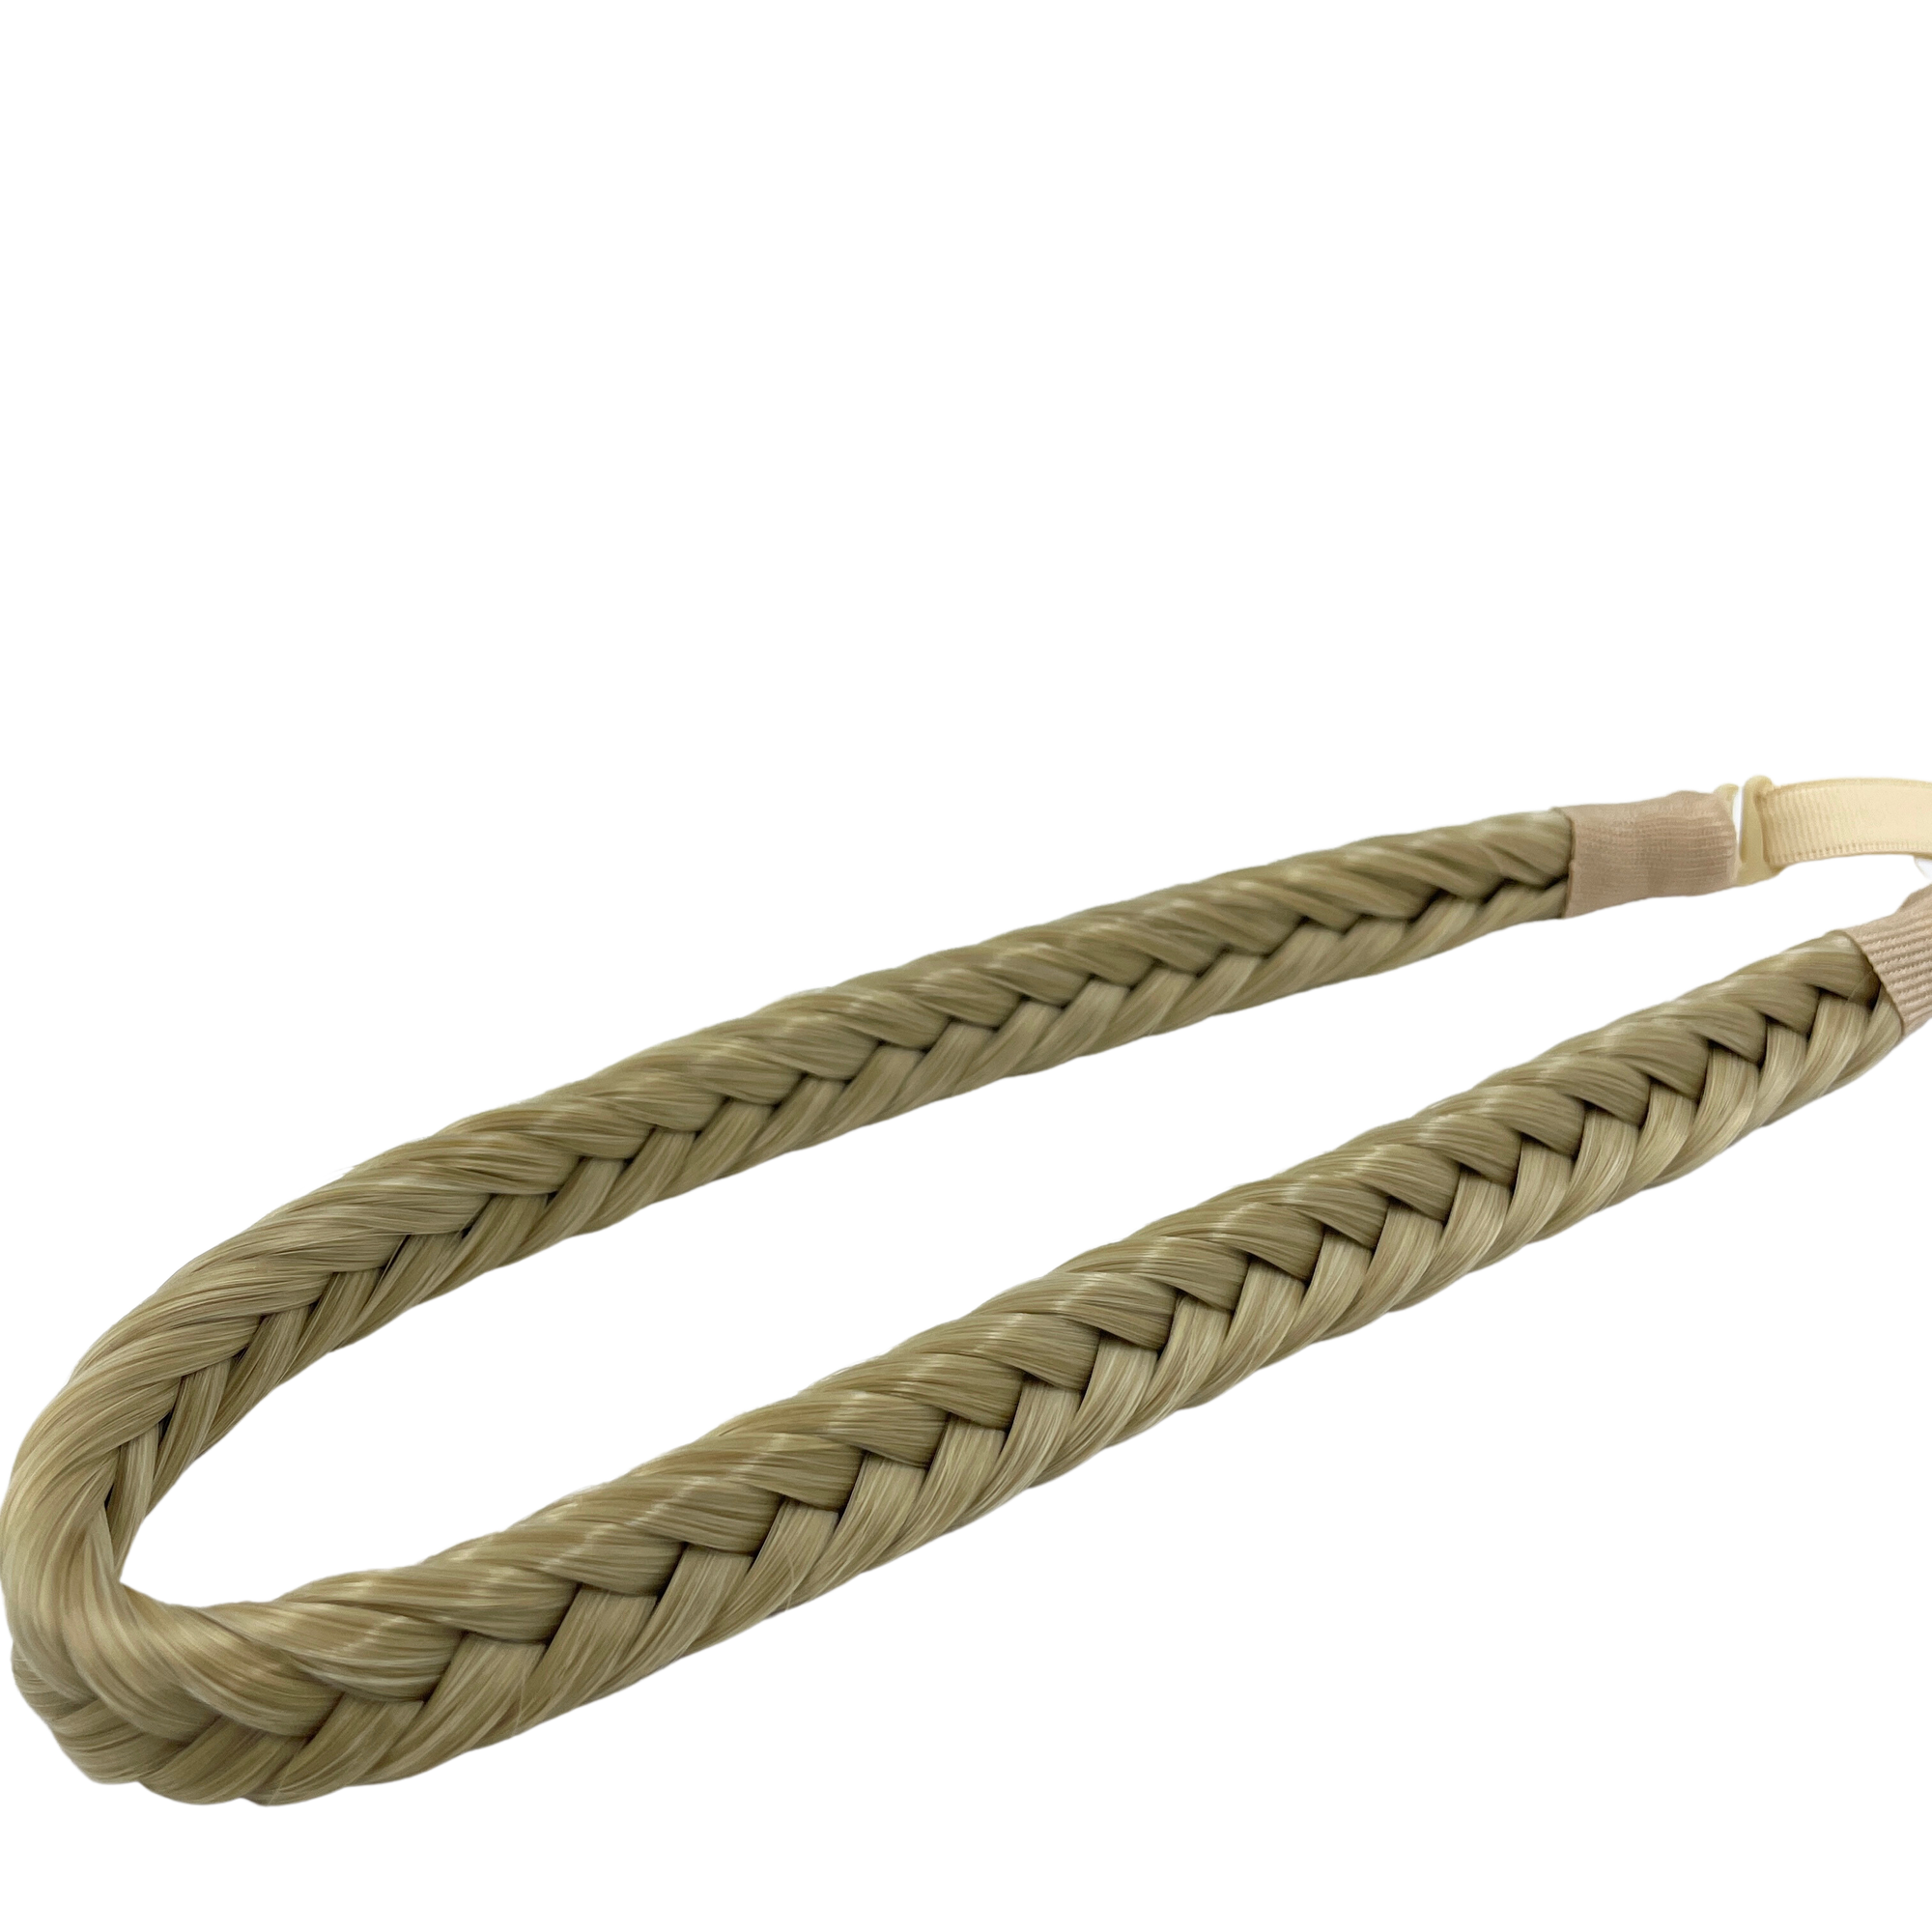 image of hair rehab london plait braid fishtail headband hairband in shade beige